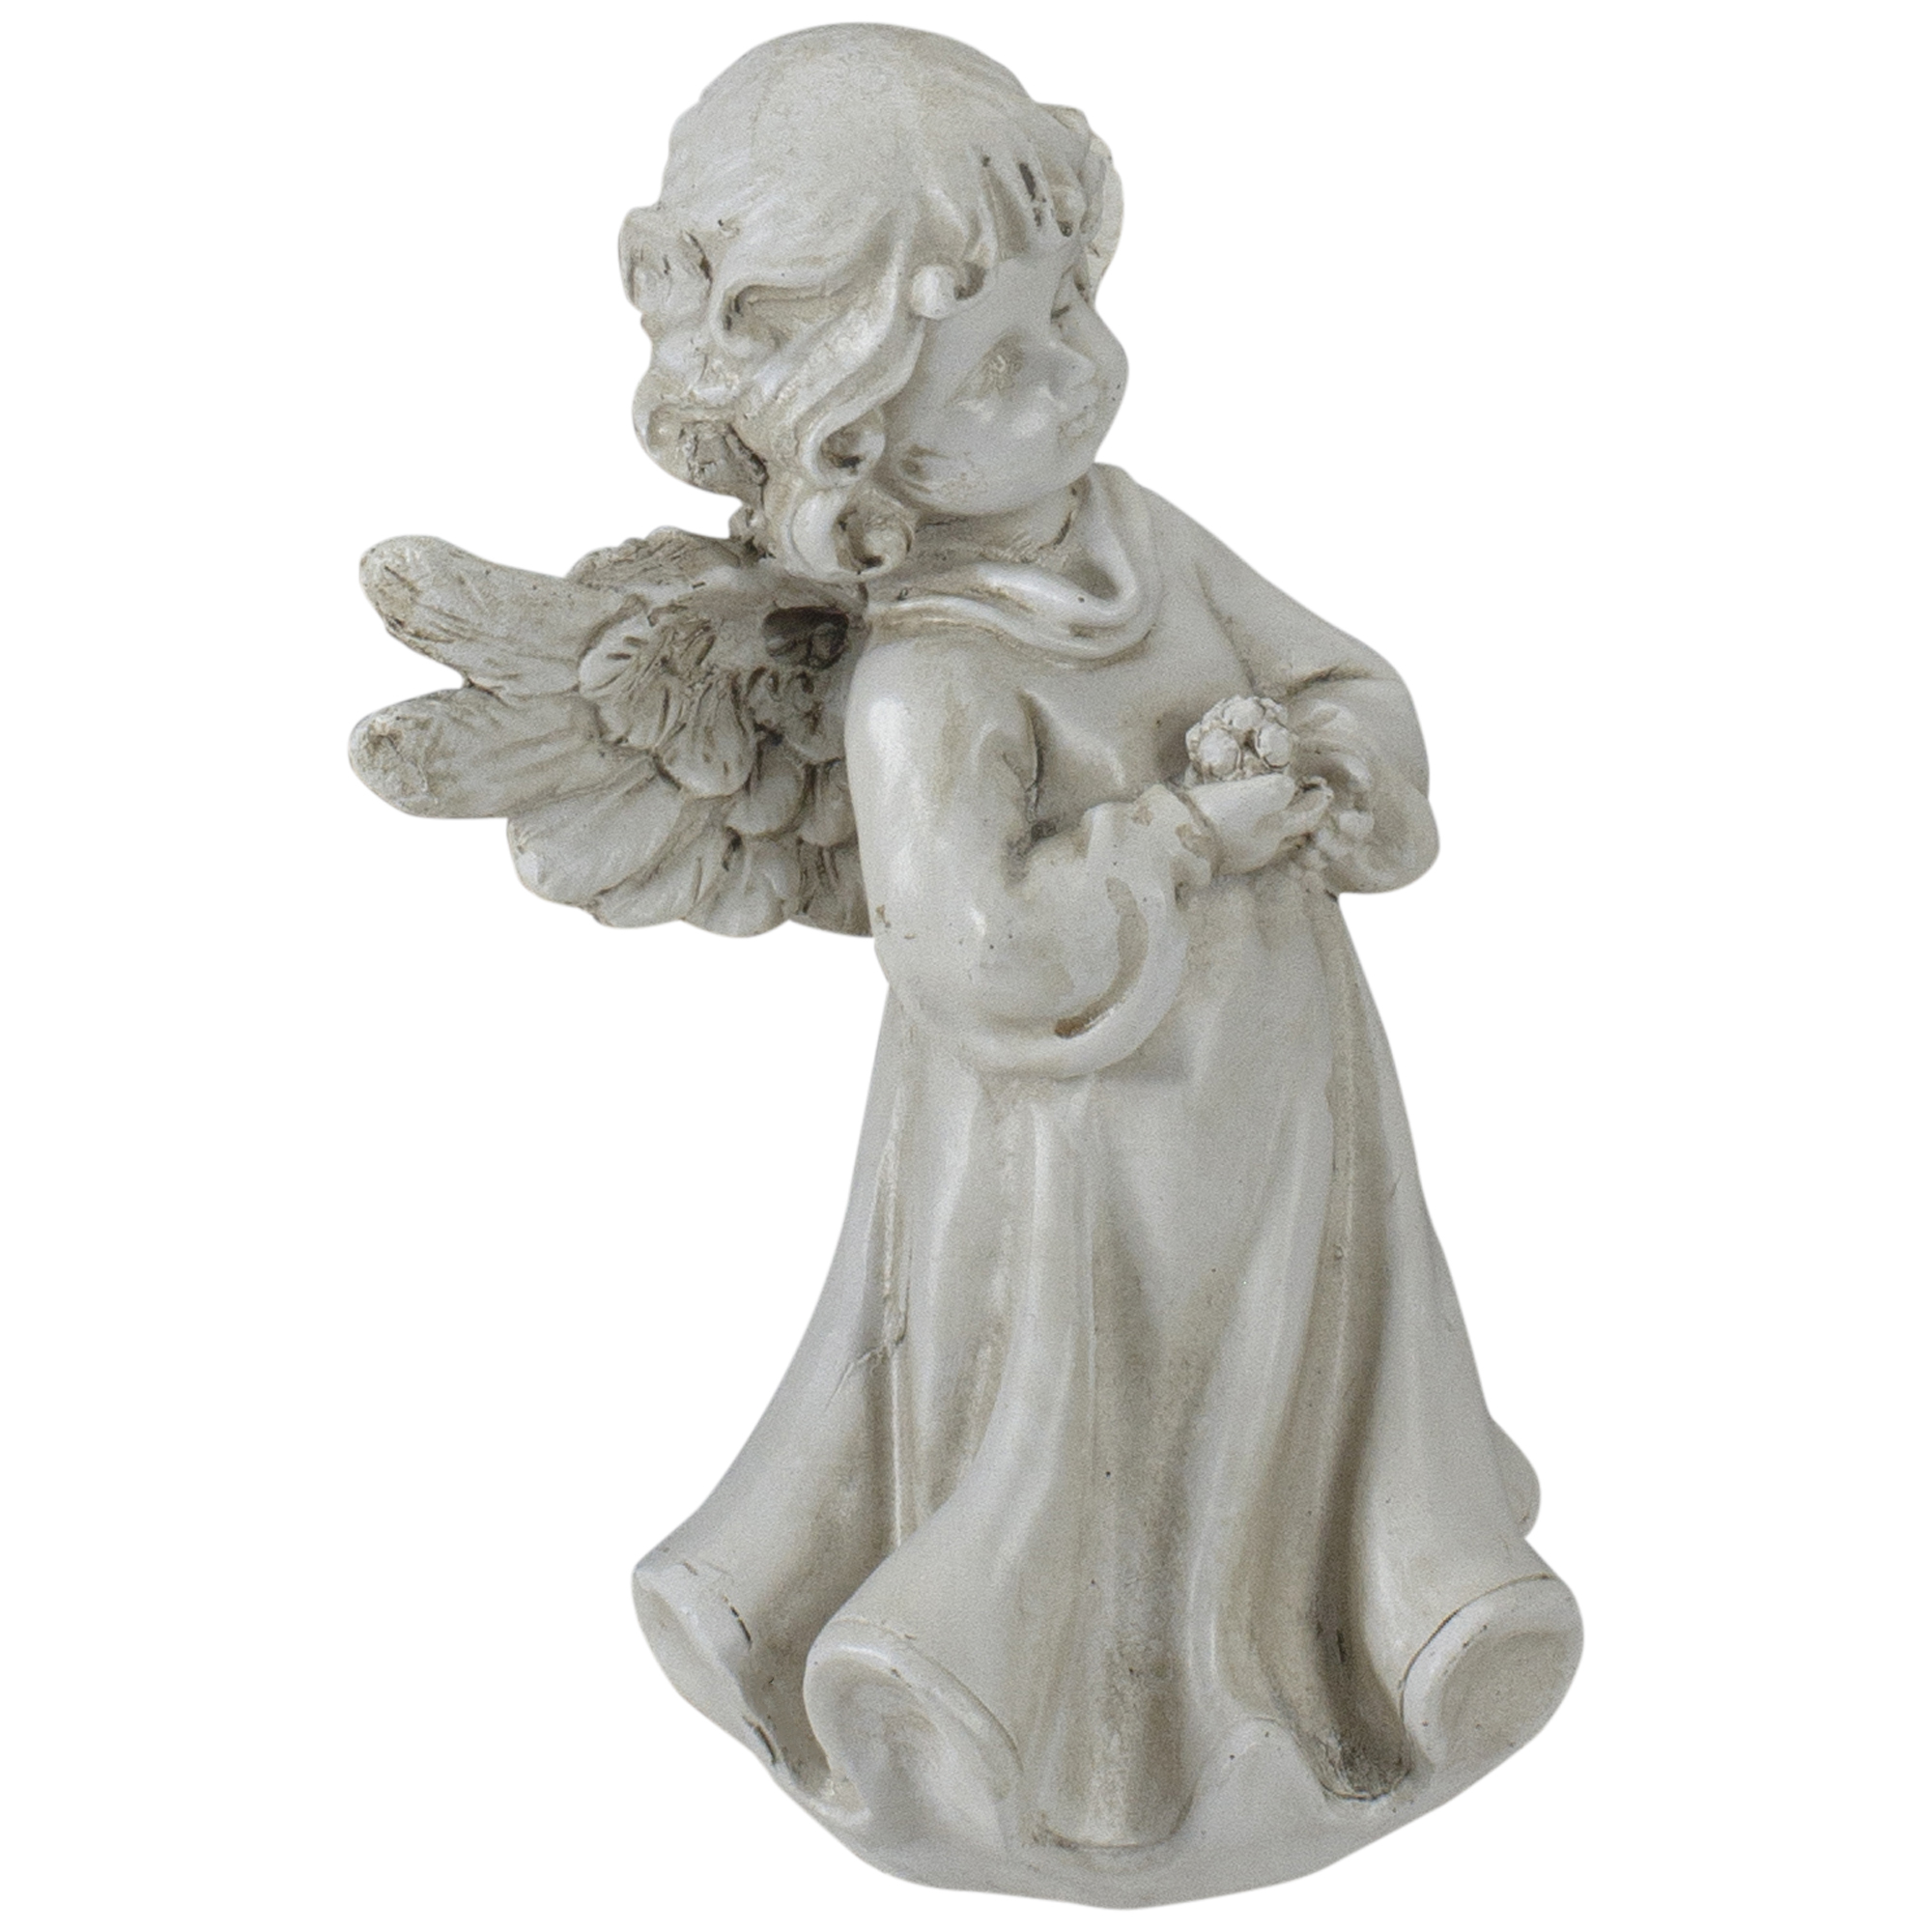 Northlight 6.5" Angel Girl Holding Flower Outdoor Garden Statue - image 3 of 5